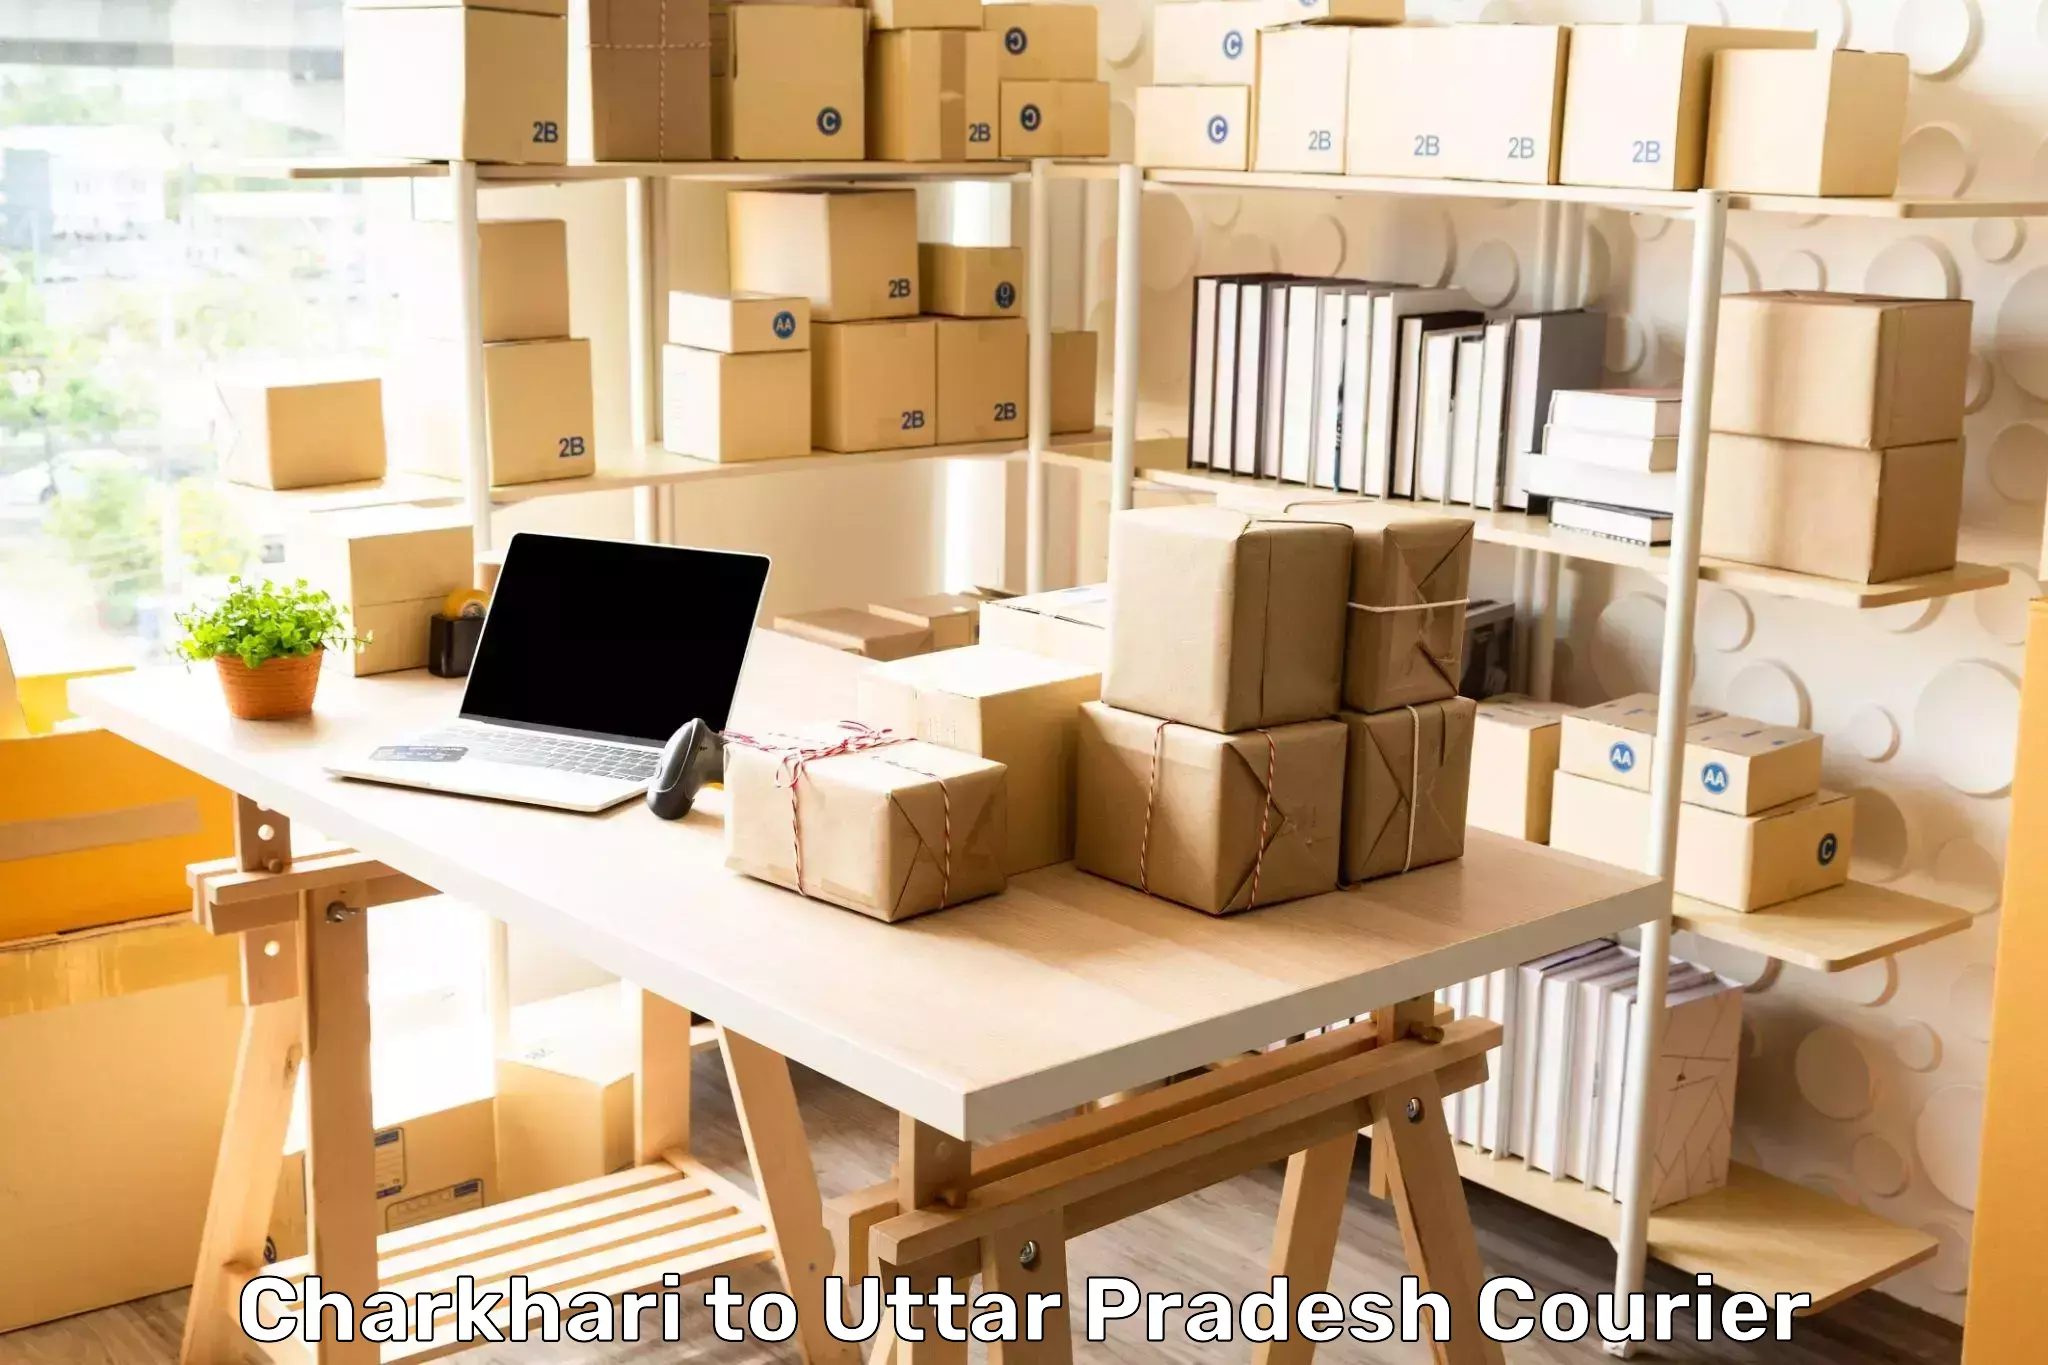 Nationwide delivery network Charkhari to Uttar Pradesh